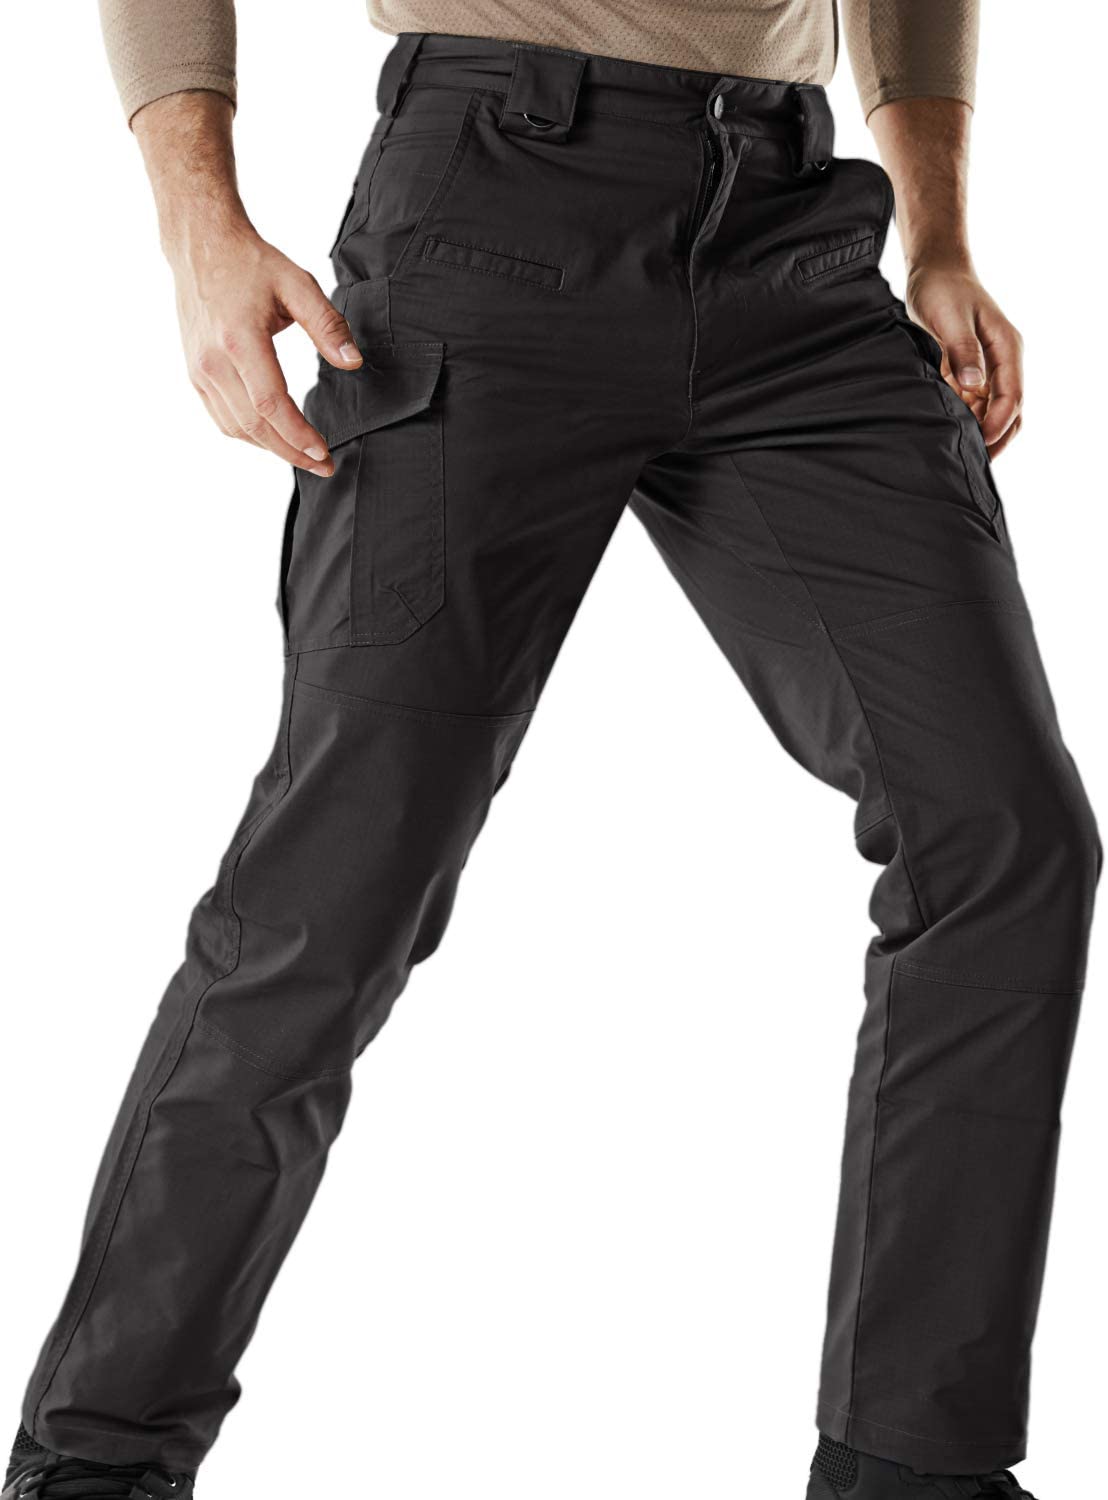 Lightweight EDC Hiking Work Pants Water Resistant Stretch Cargo Pants CQR Men's Flex Ripstop Tactical Pants 